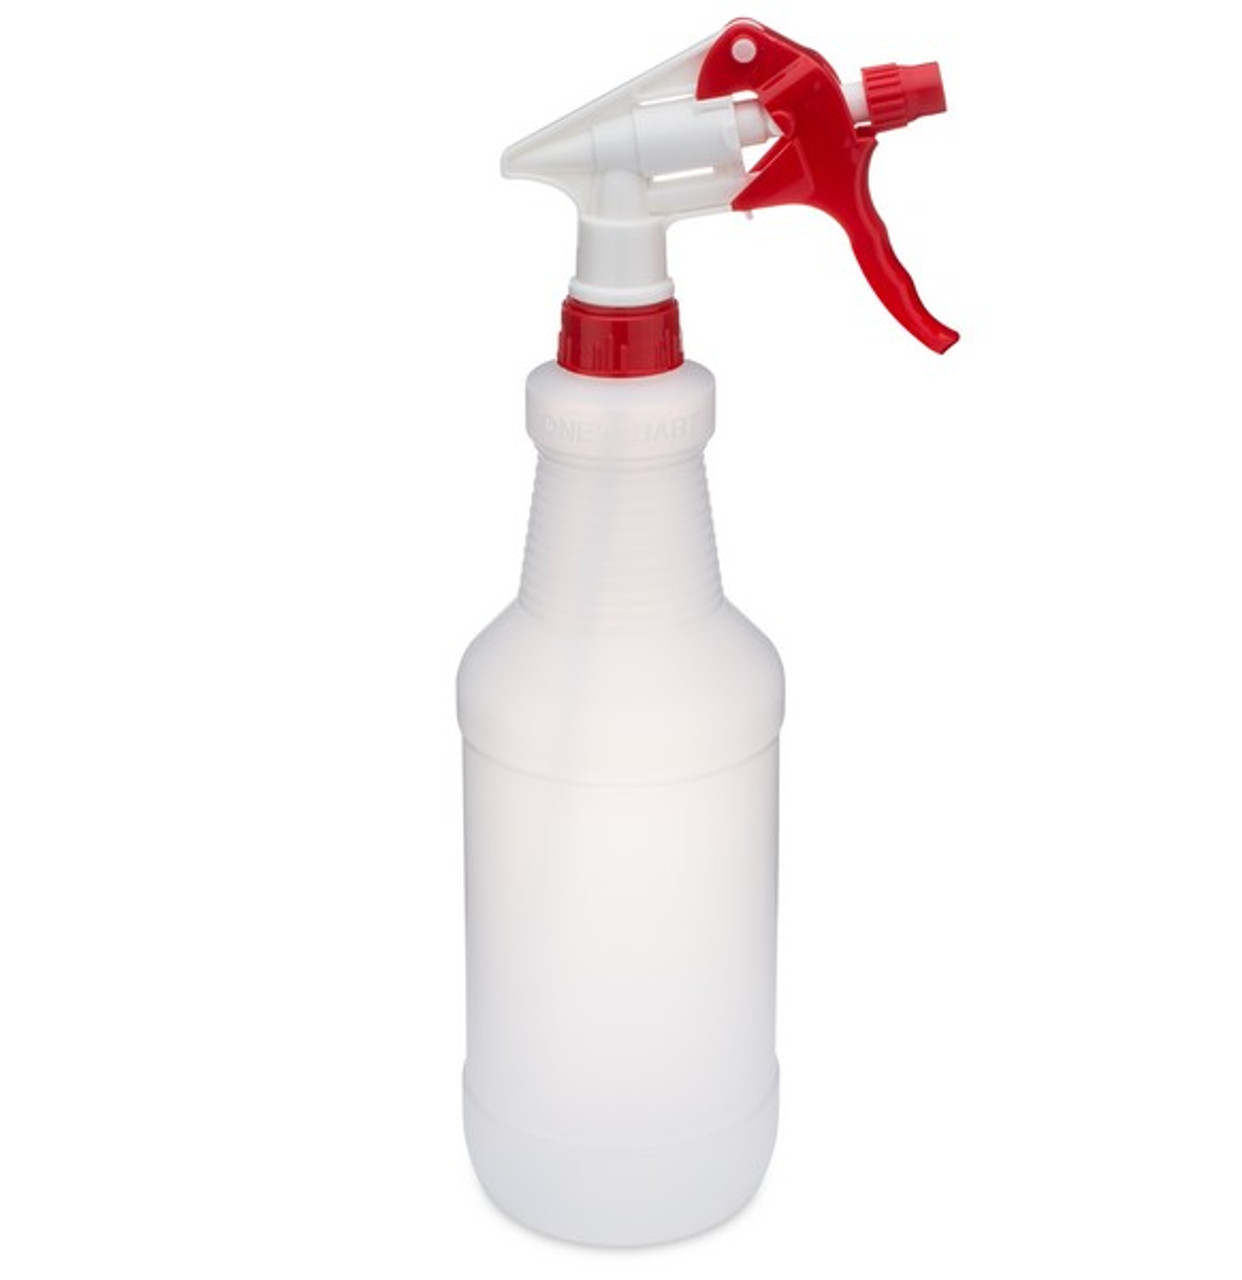 HDPE Plastic Spray Bottles with Trigger Sprayer